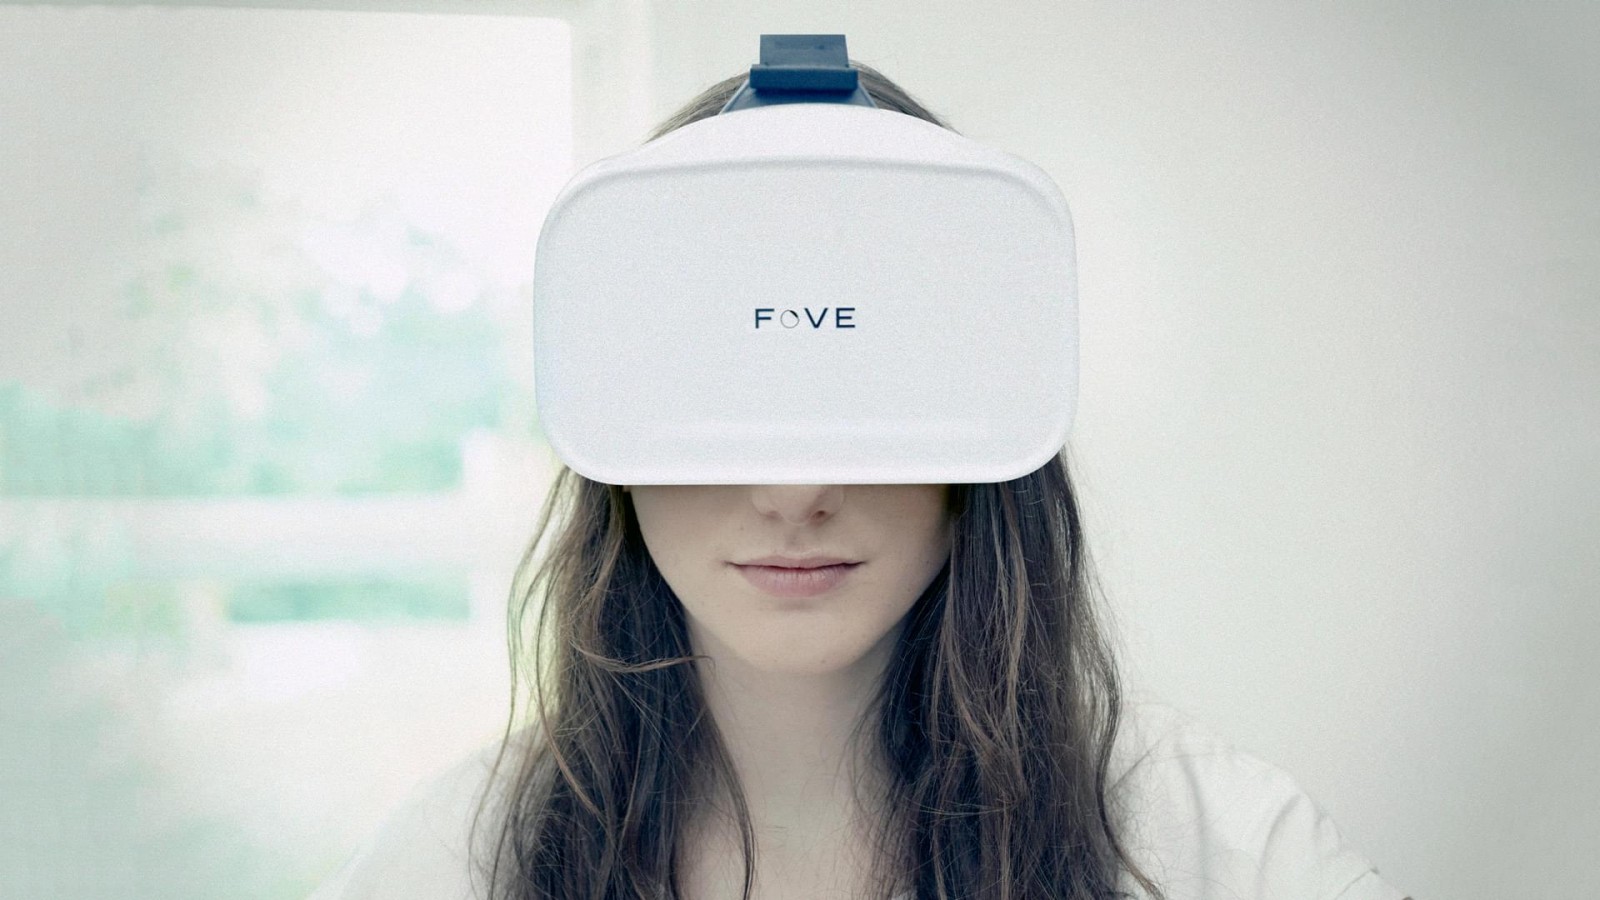 Чем уникален VR шлем FOVE 0?